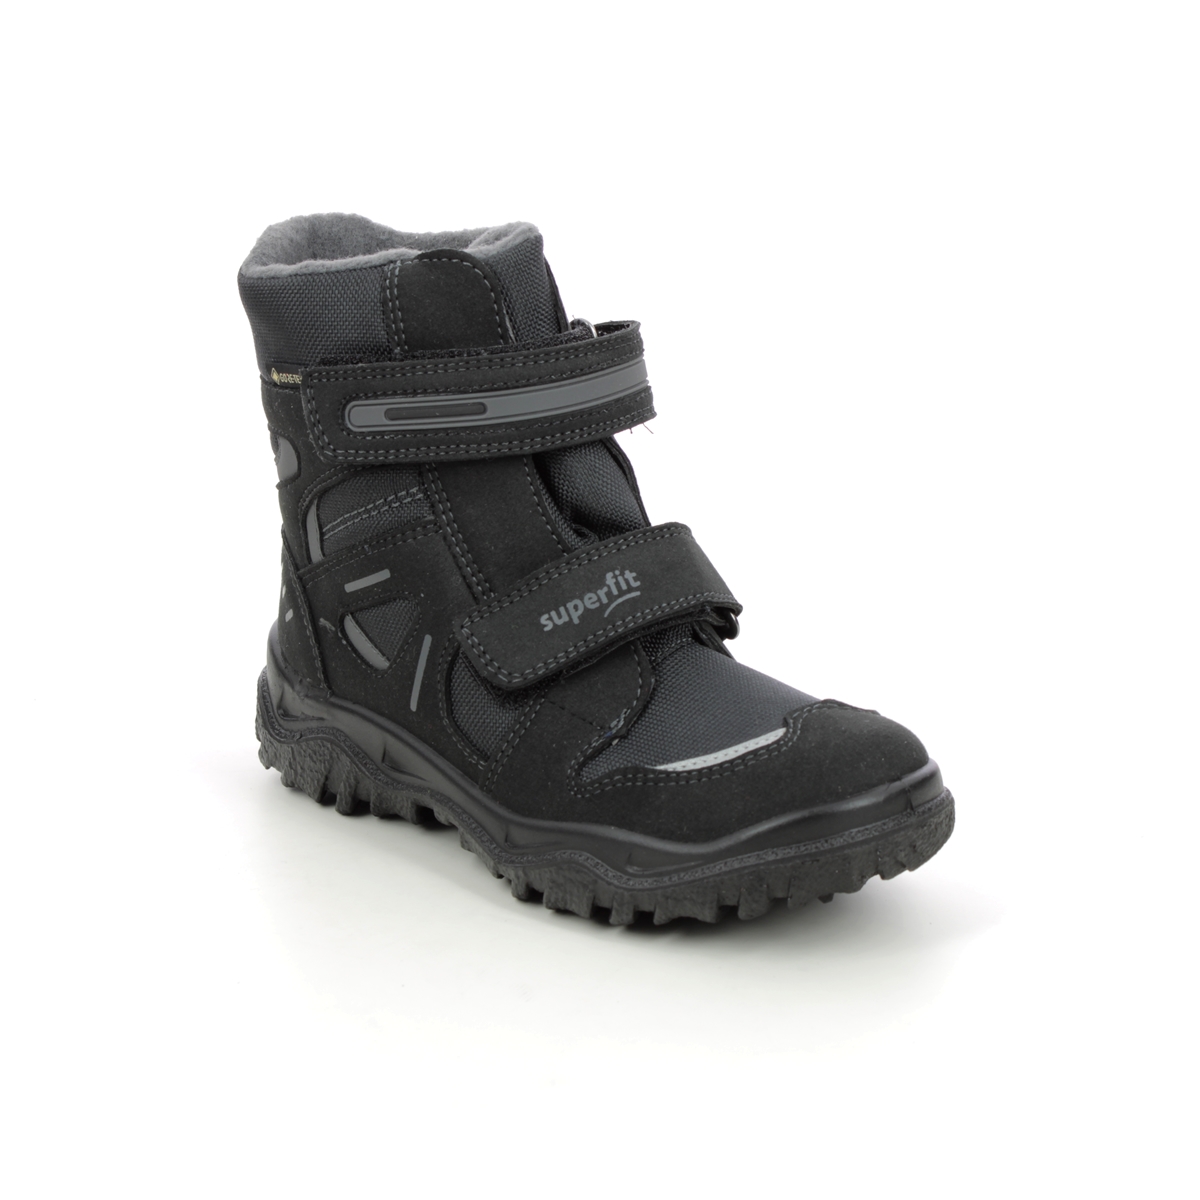 Superfit Husky Jnr Gore Black Kids Boys Boots 0809080-0600 In Size 36 In Plain Black For kids